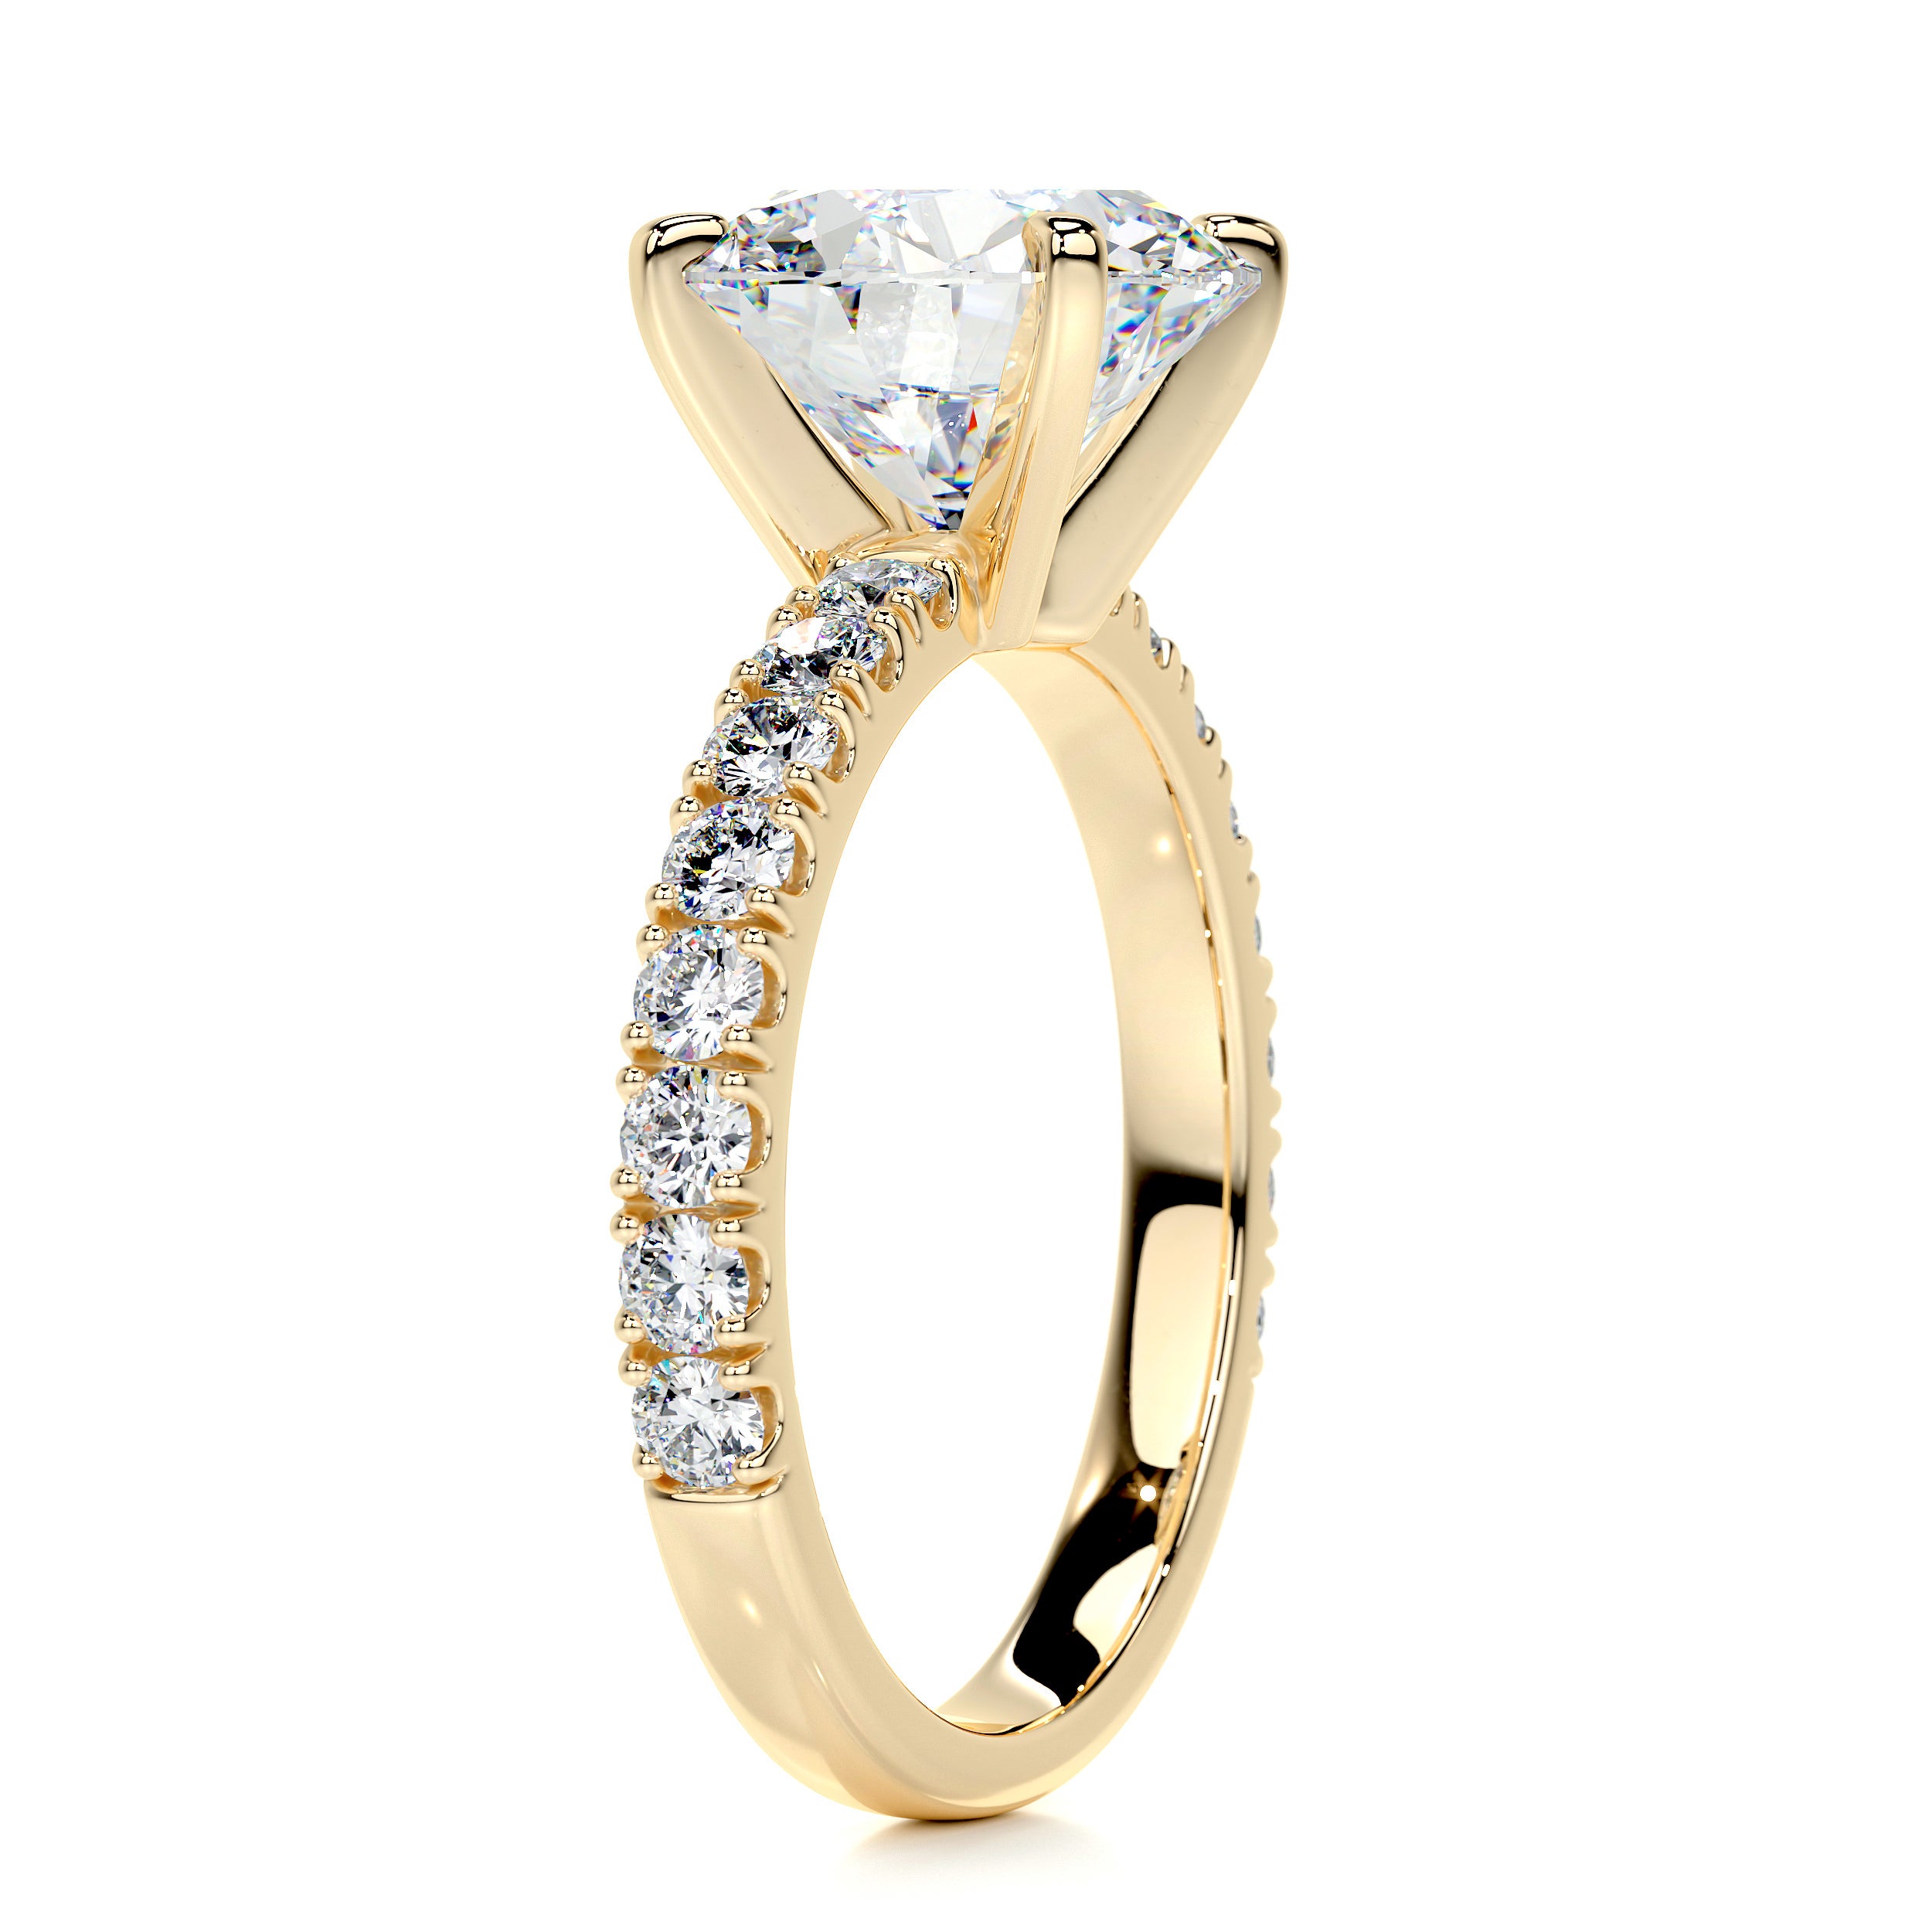 Alison Moissanite & Diamonds Ring   (3.62 Carat) -18K Yellow Gold